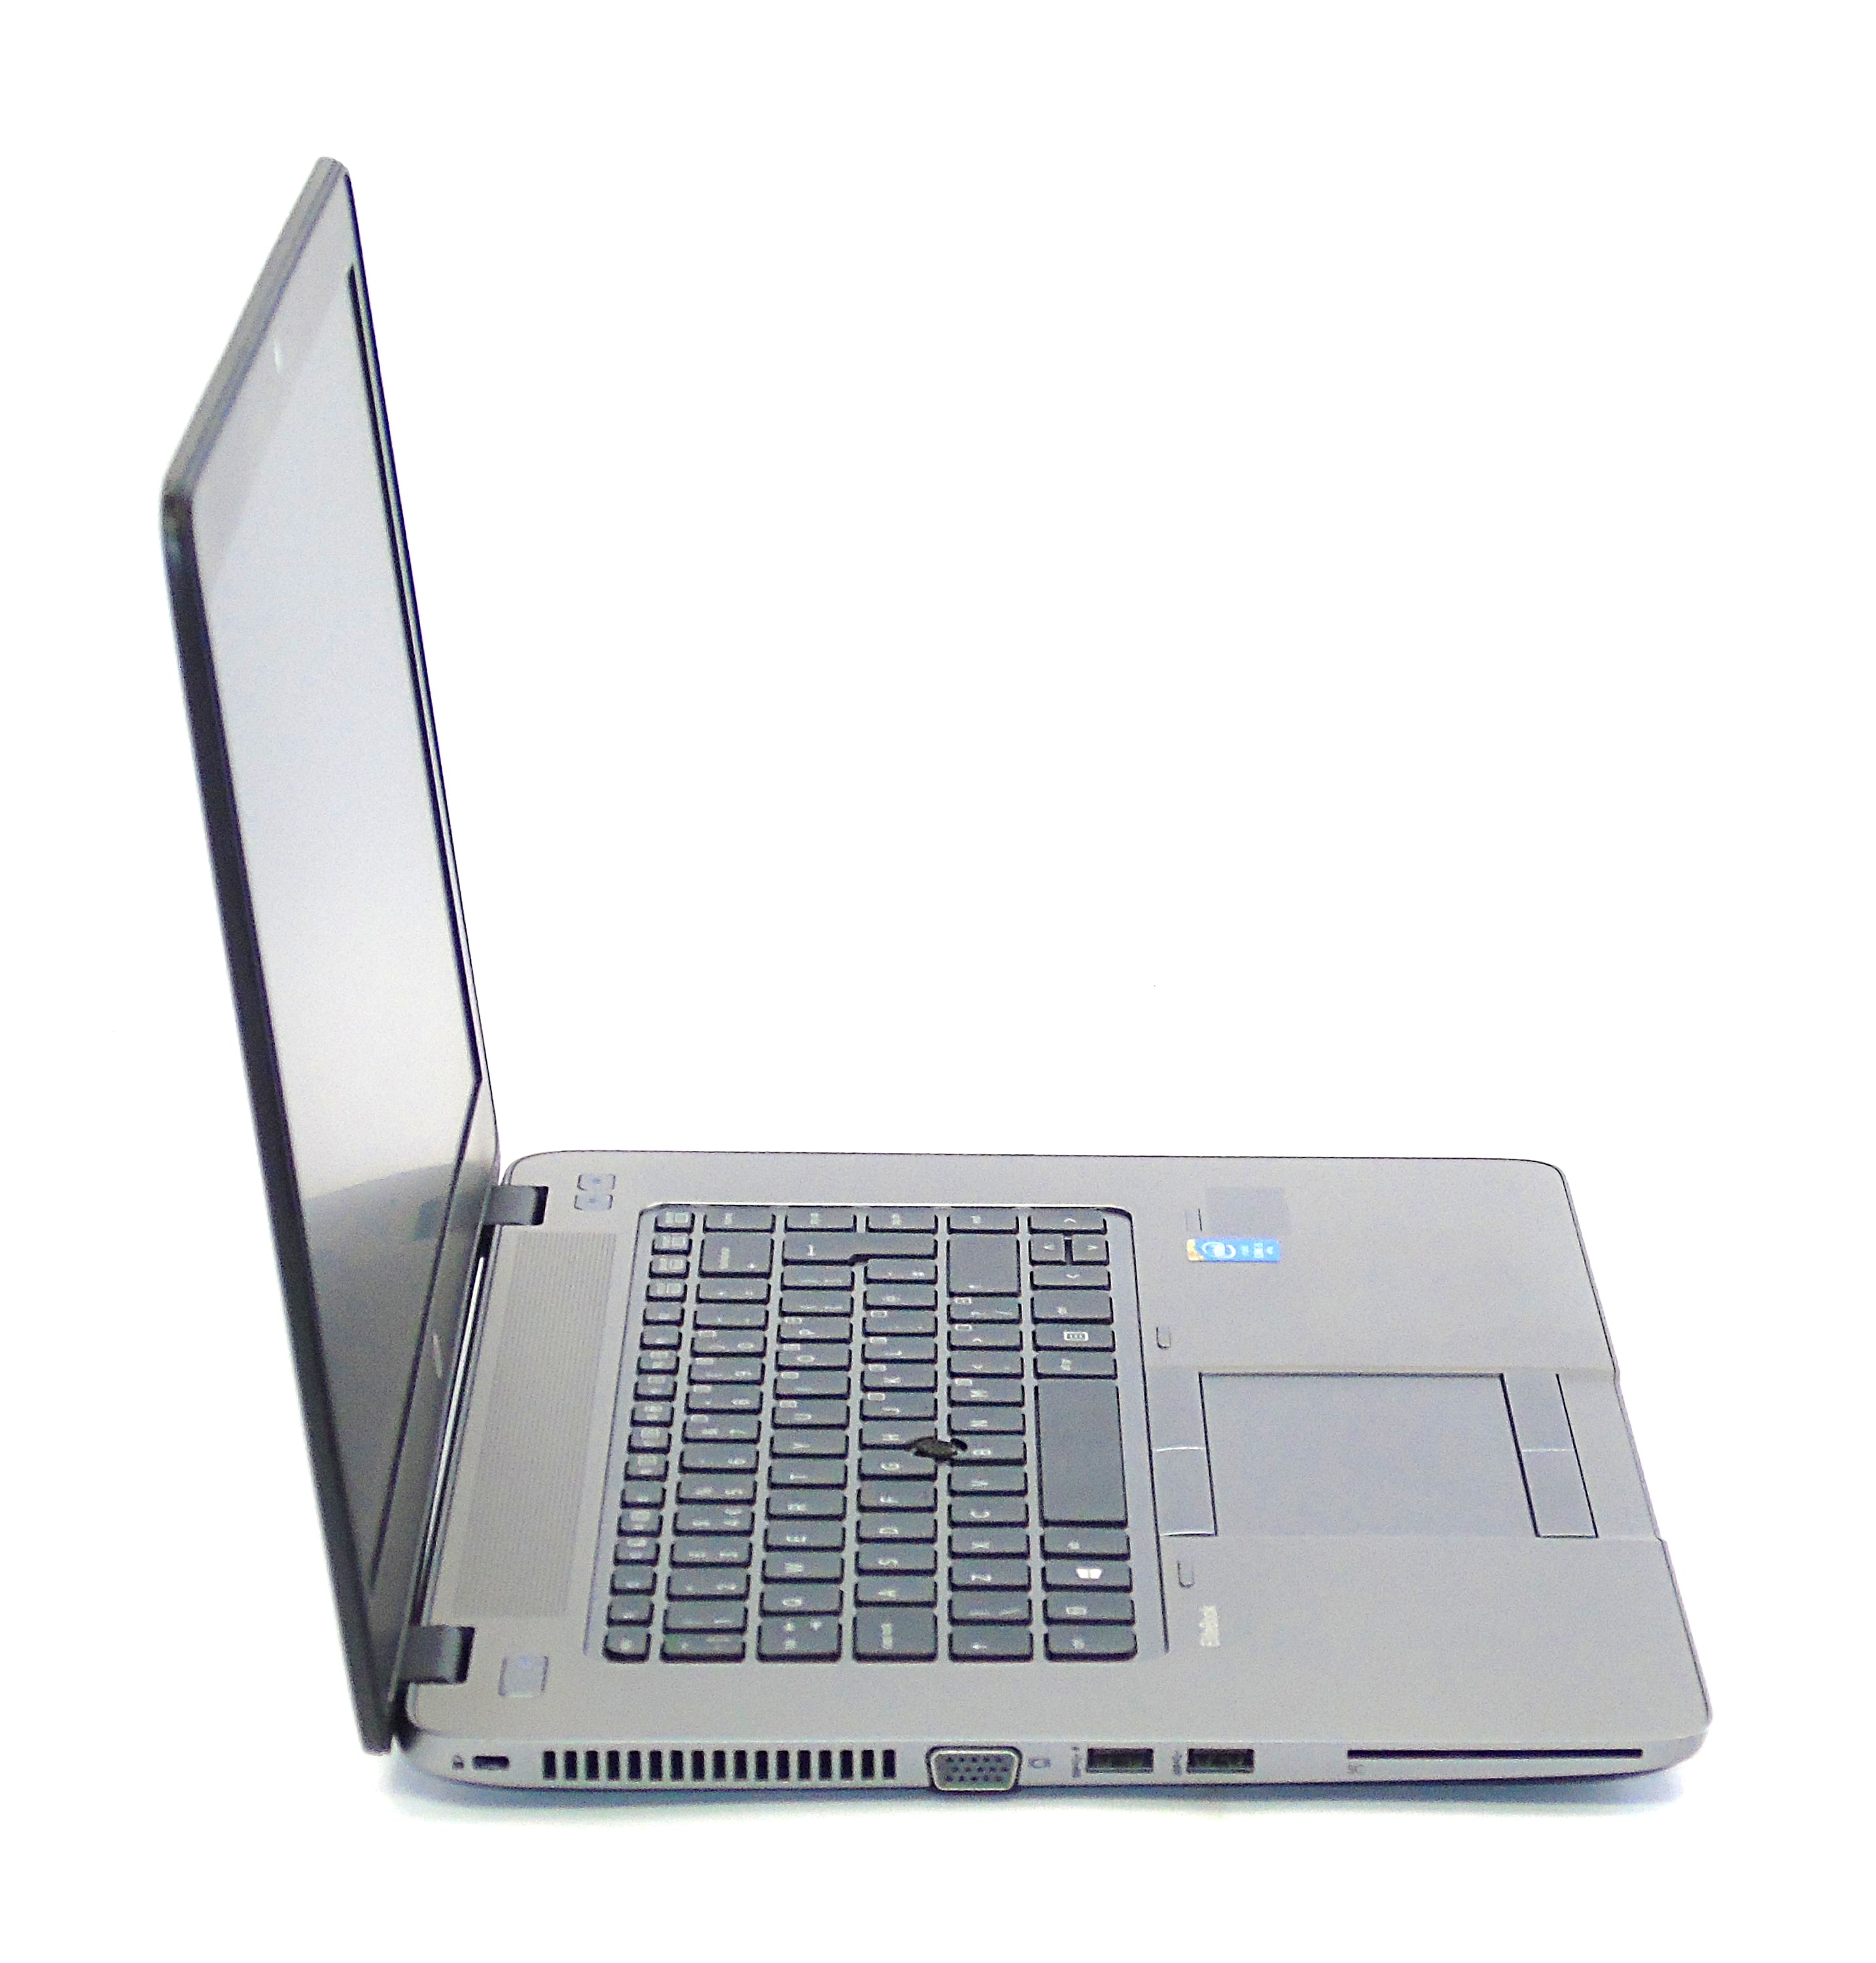 HP Elitebook 850 G2 Laptop, 15.6" Intel Core i7, 8GB RAM, 256GB SSD